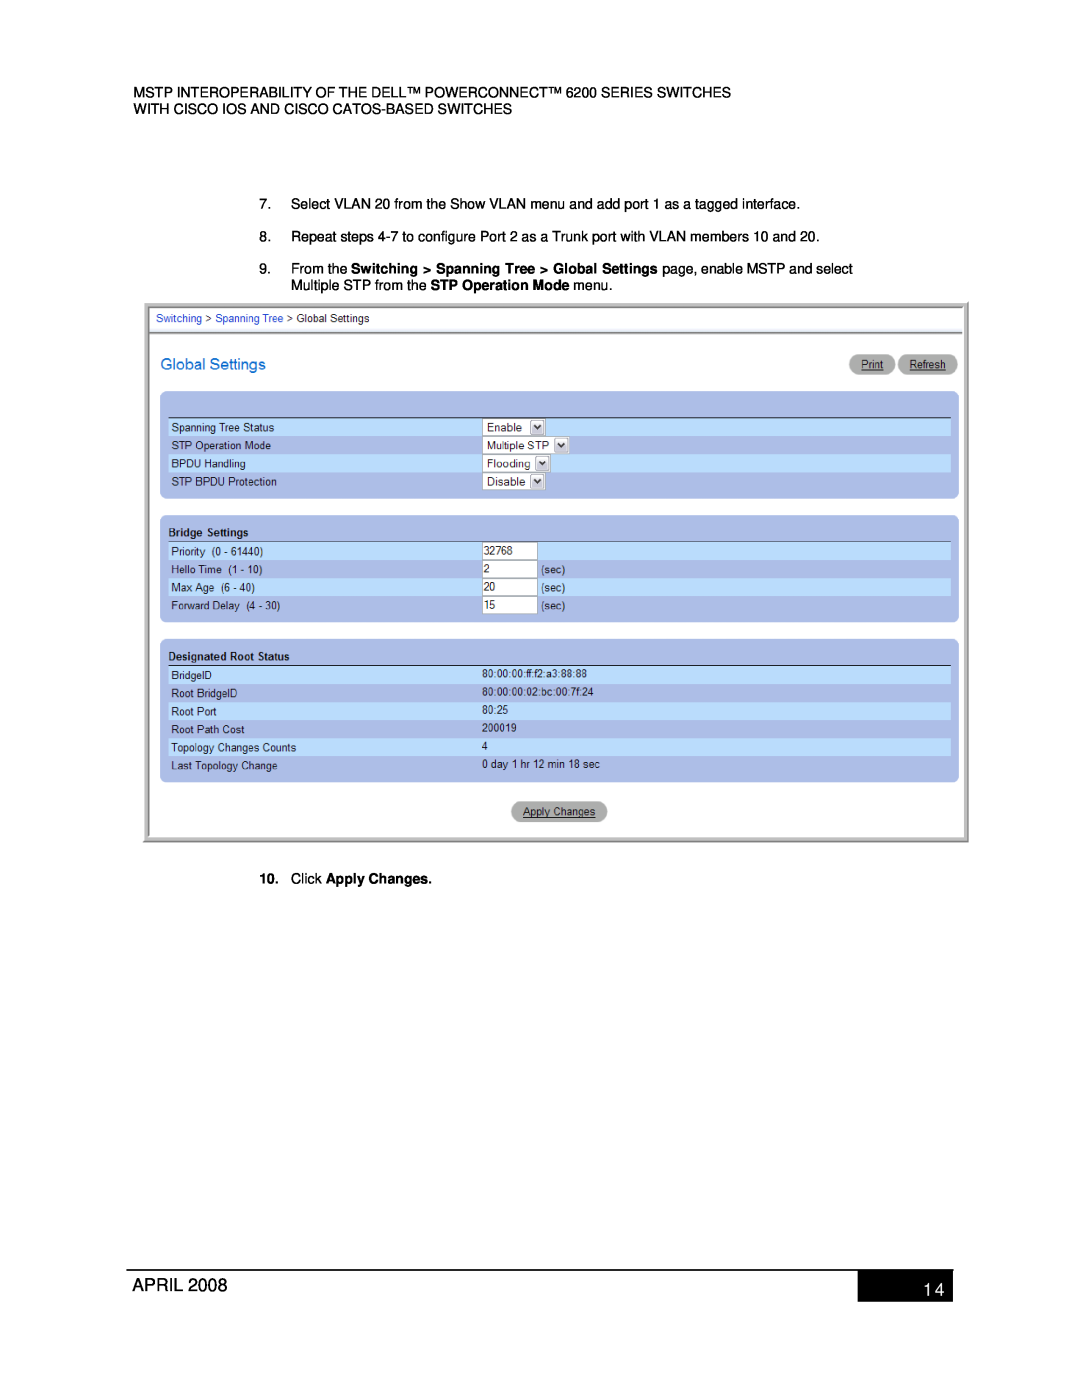 Dell 6200 manual Click Apply Changes, April 